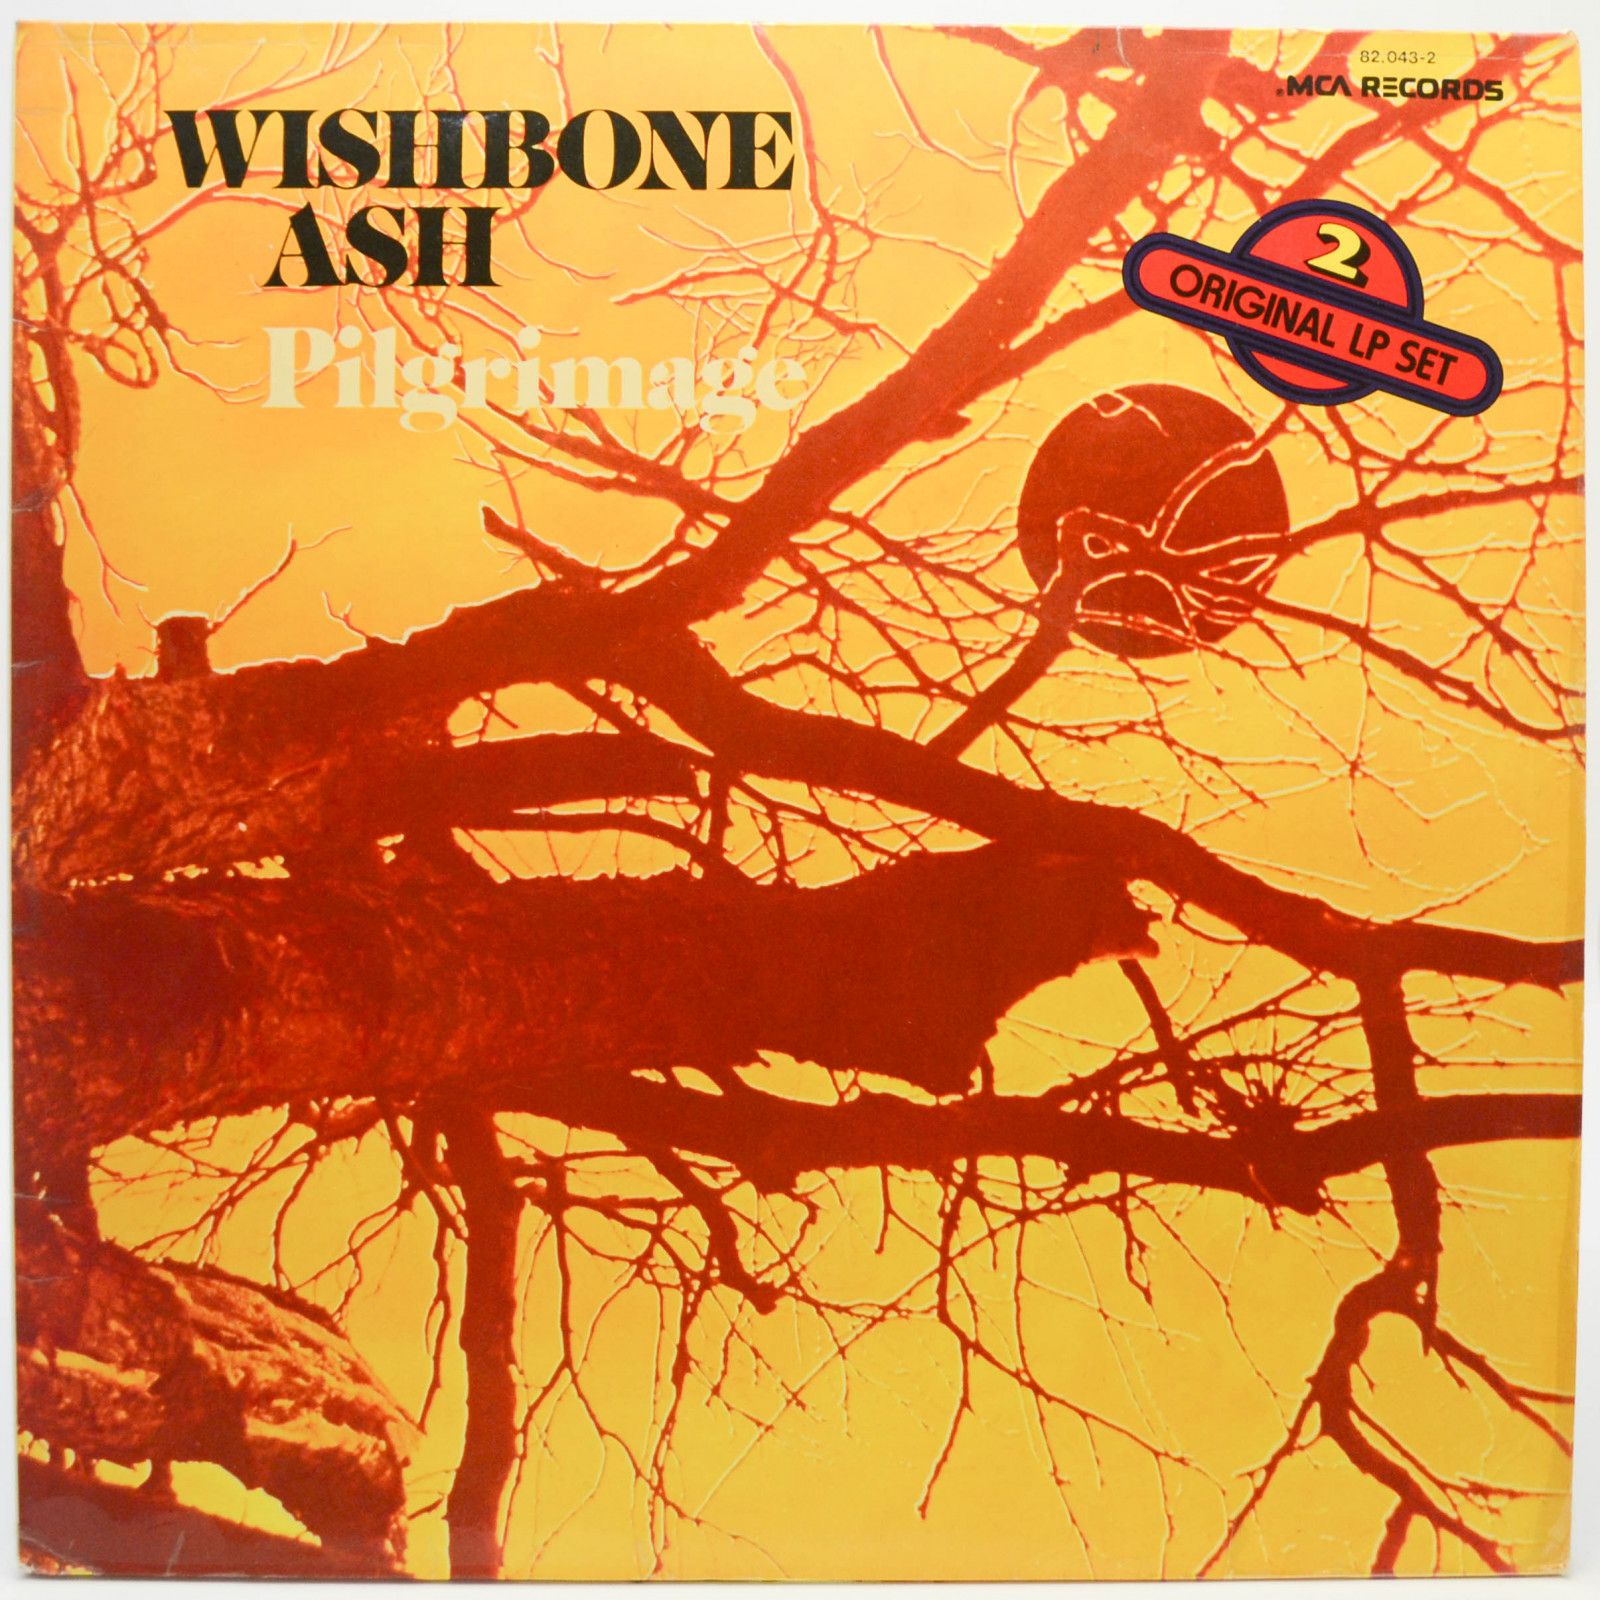 Wishbone Ash — Pilgrimage / Argus (2LP), 1974